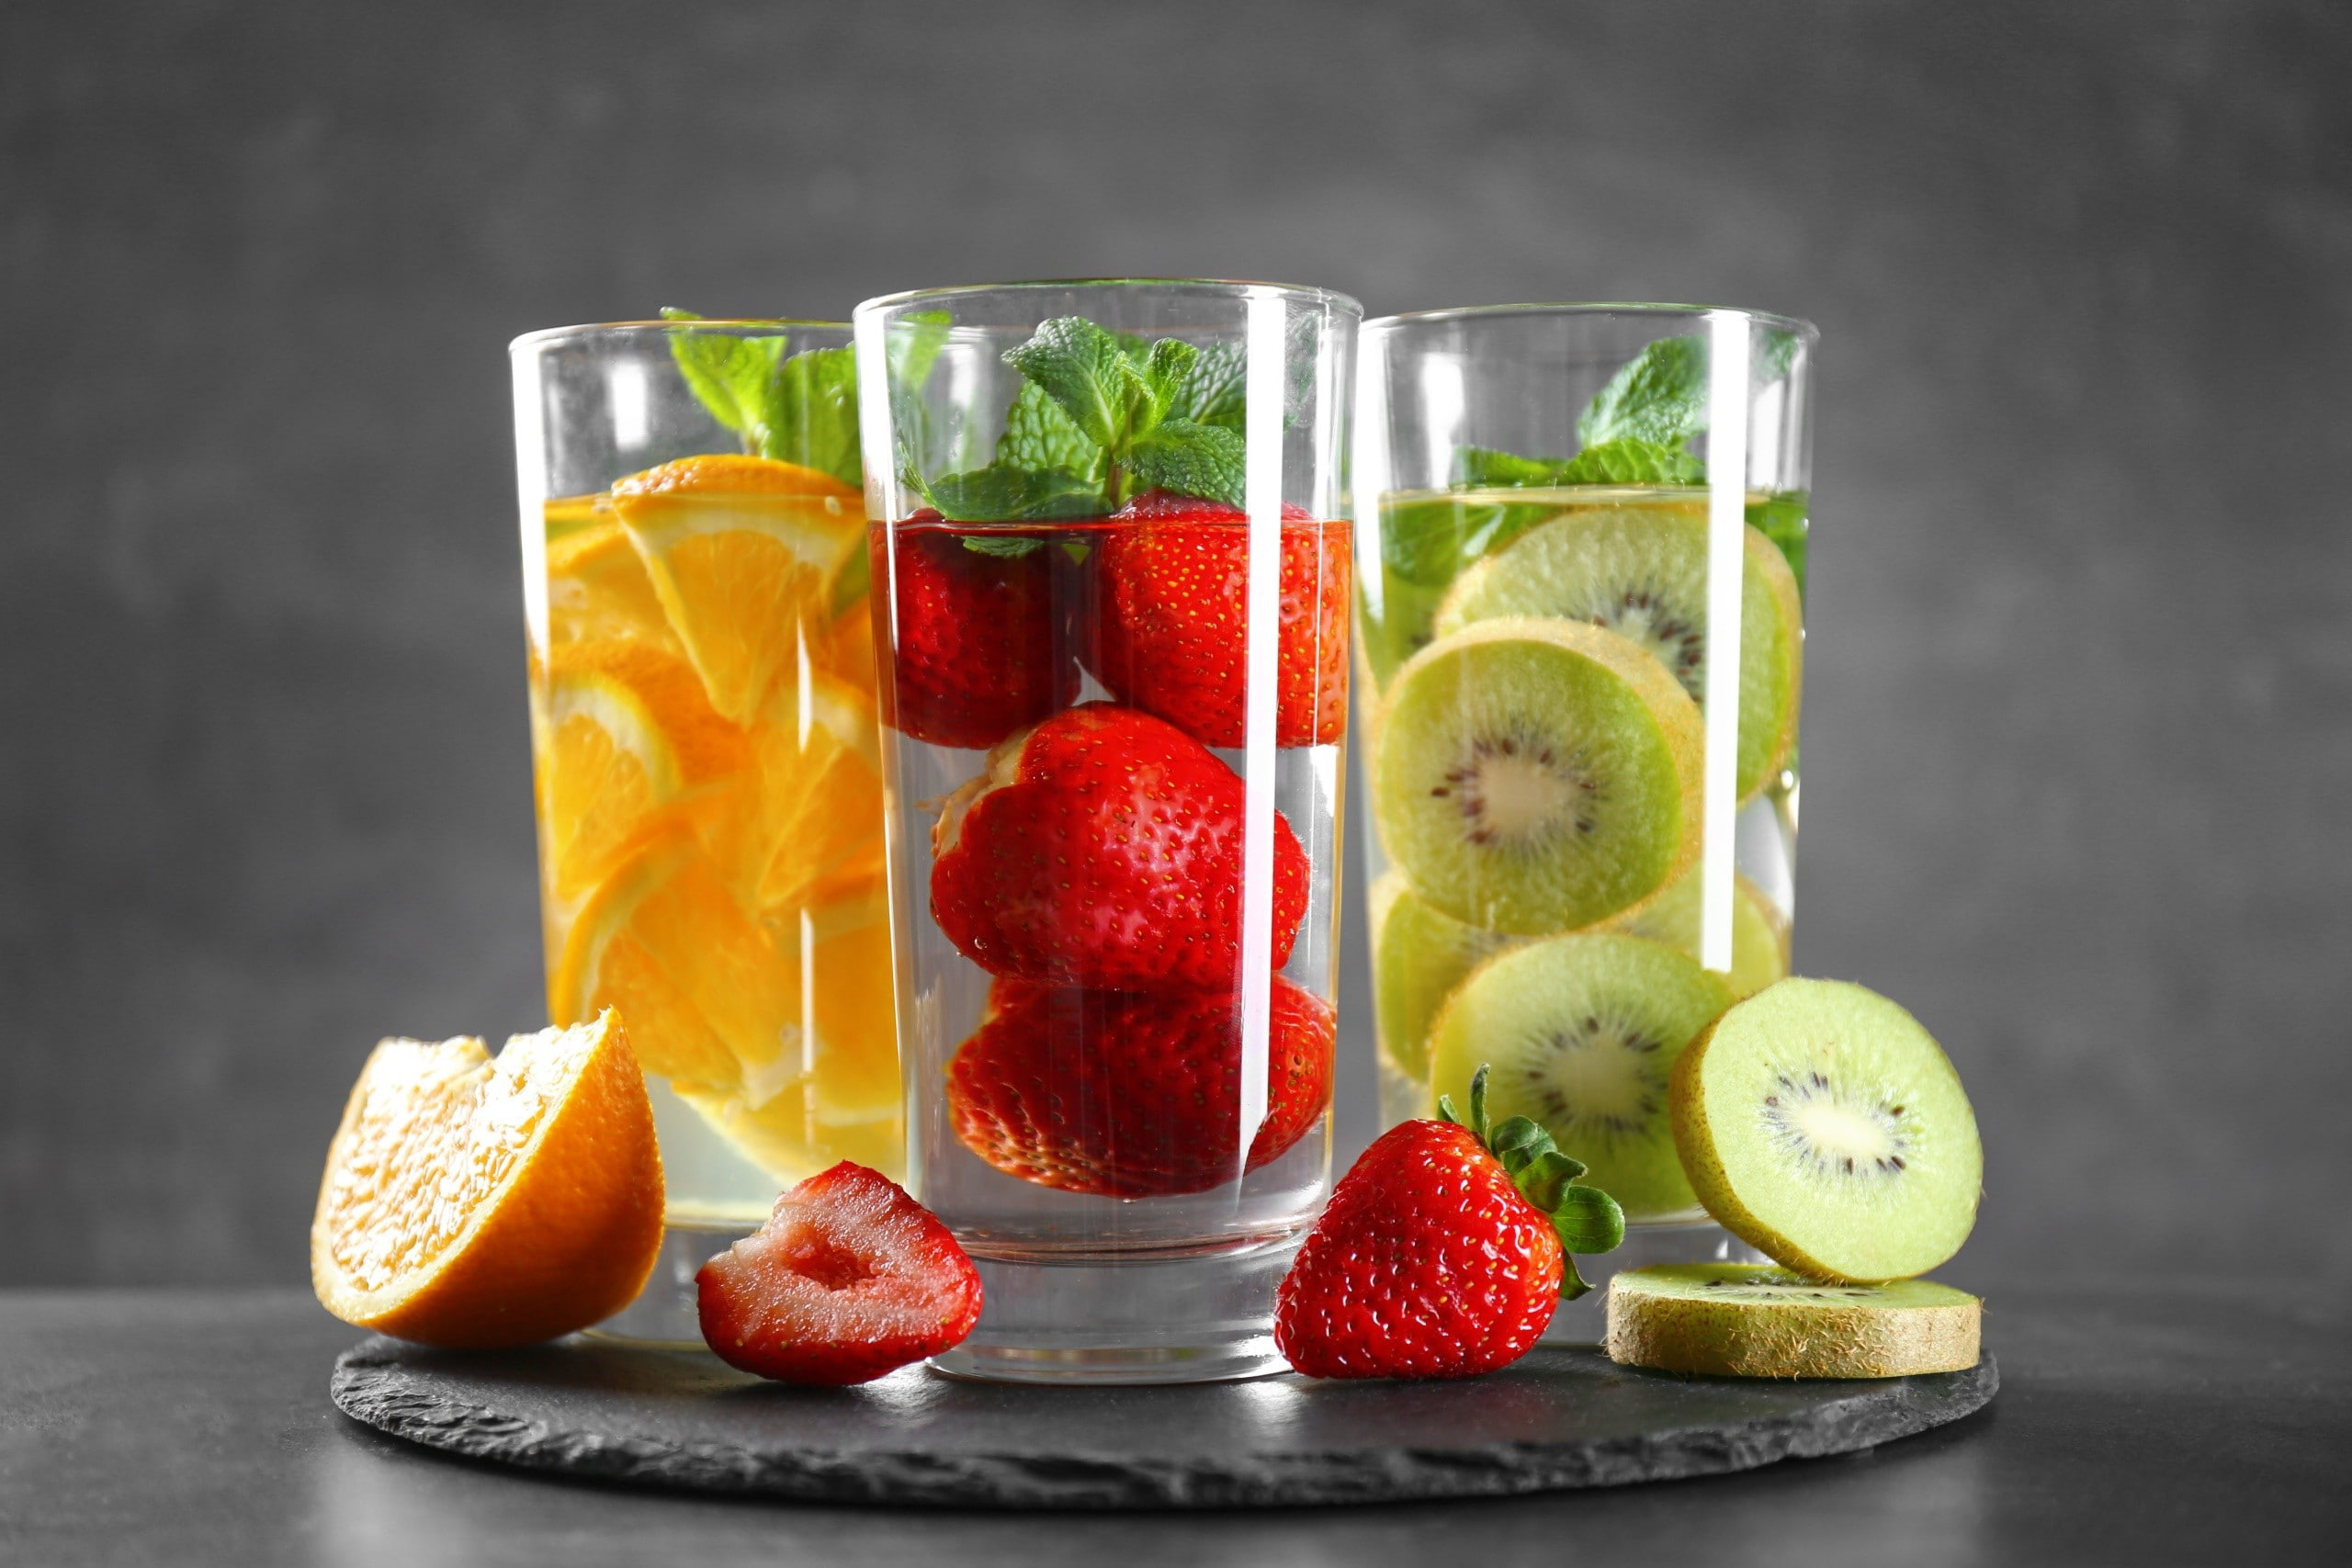 Food wallpaper, drinking glass, fruit, kiwi (fruit), strawberries, food and drink